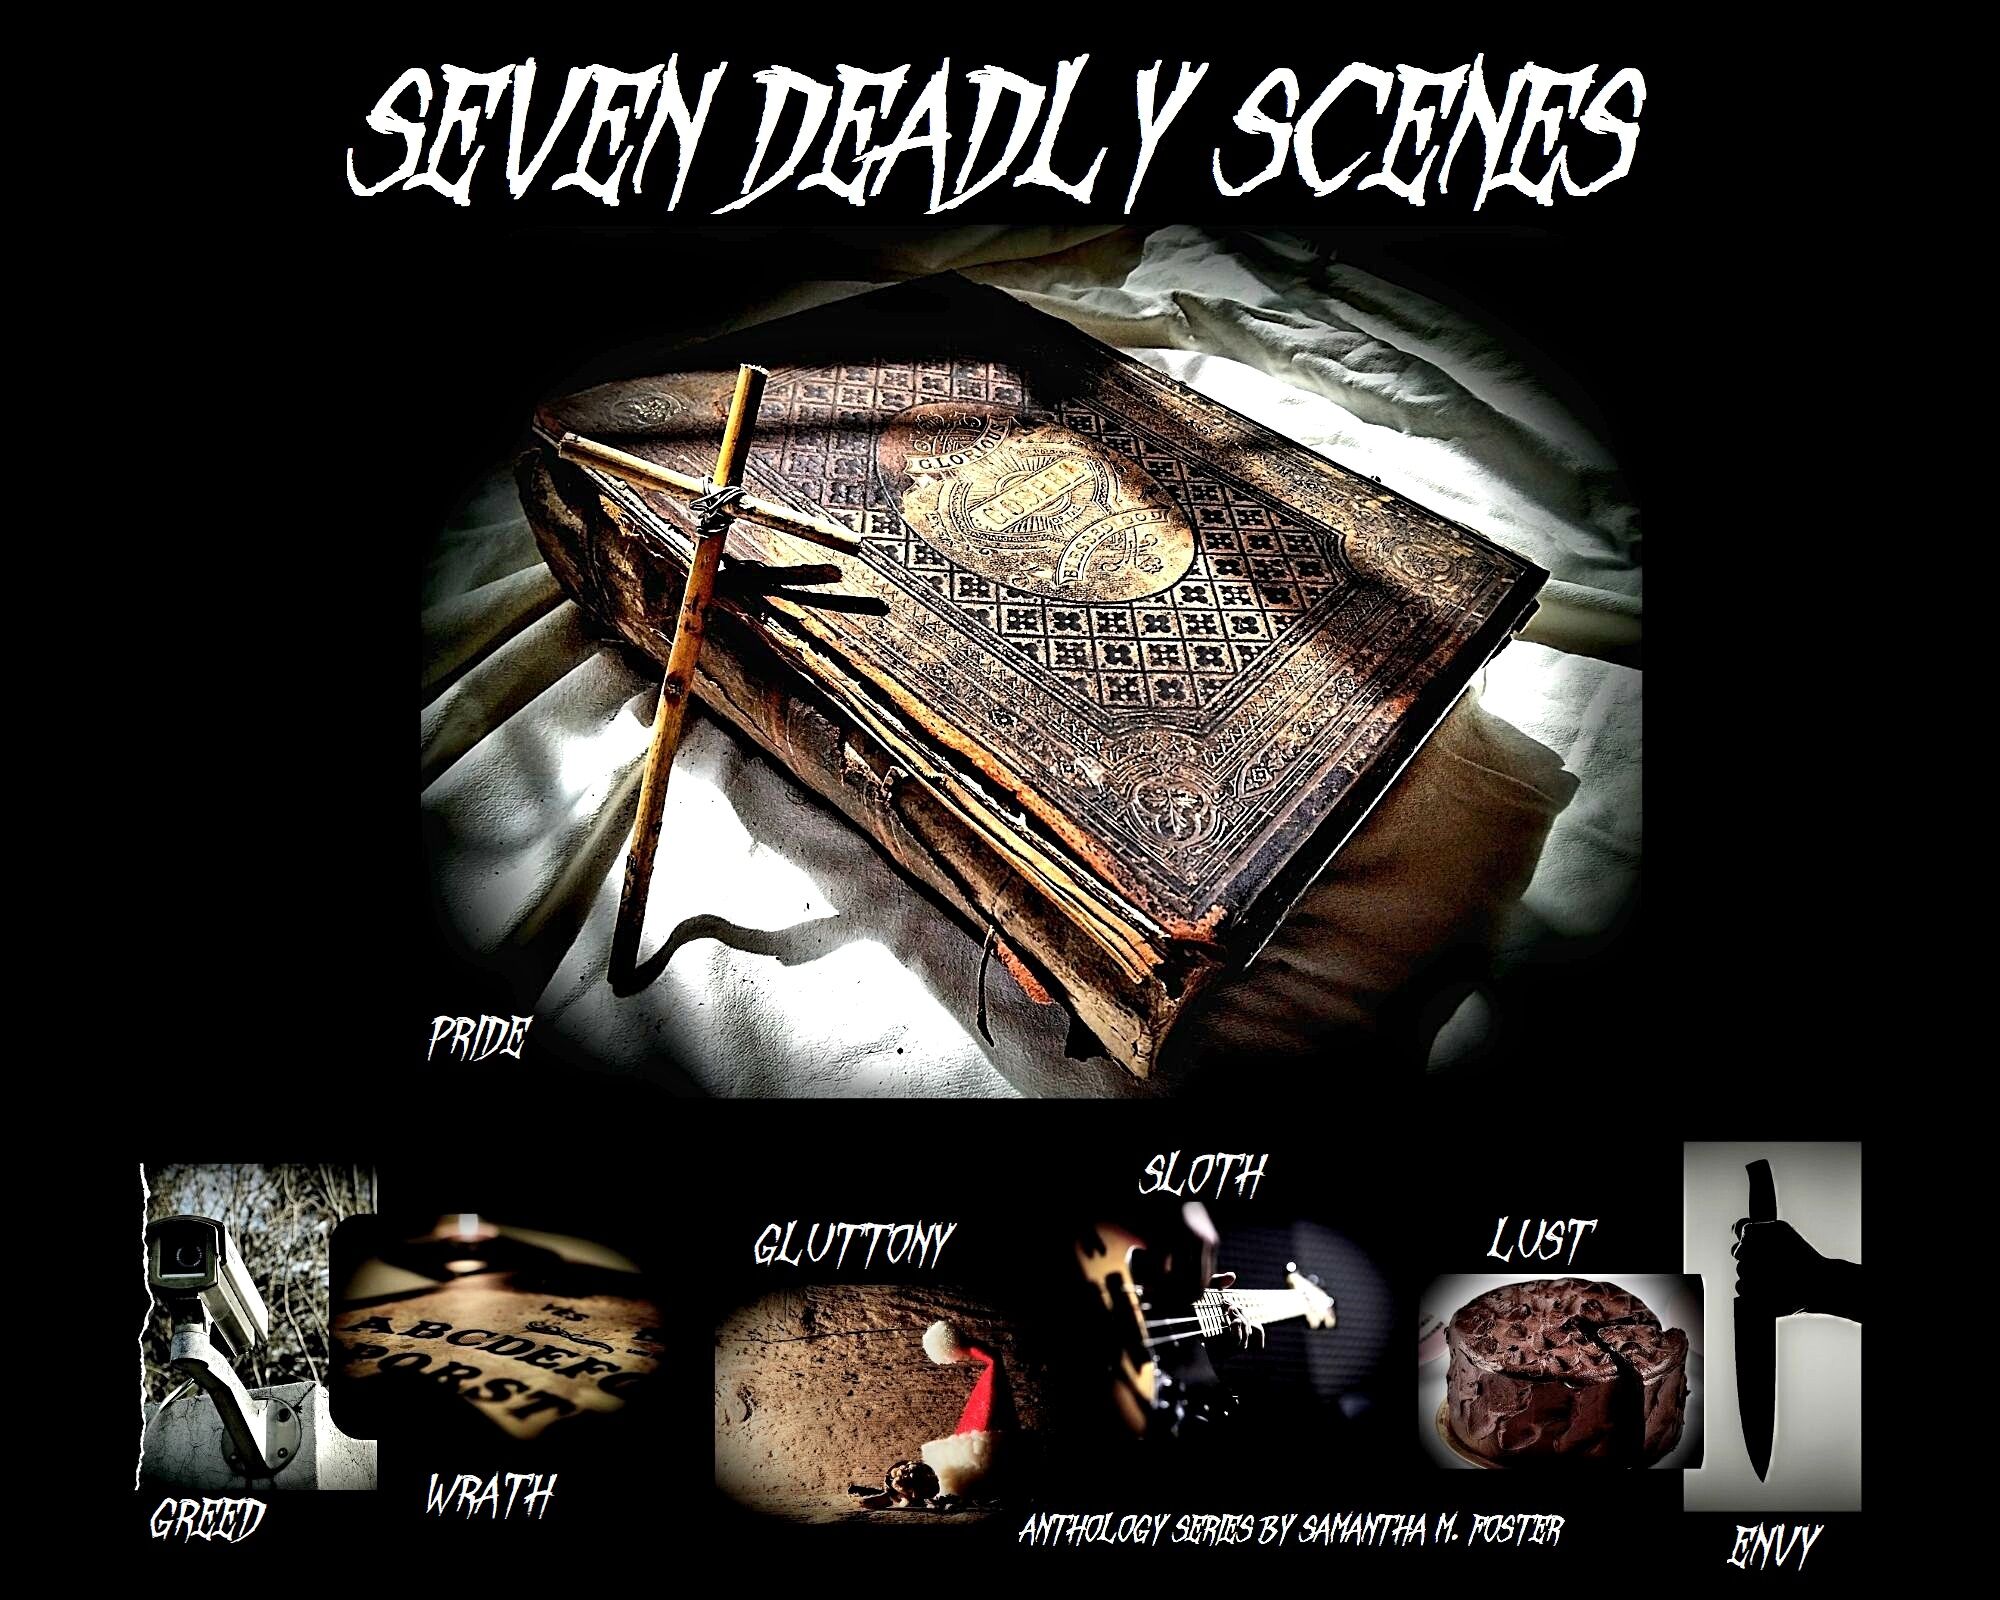 SEVEN DEADLY SCENES